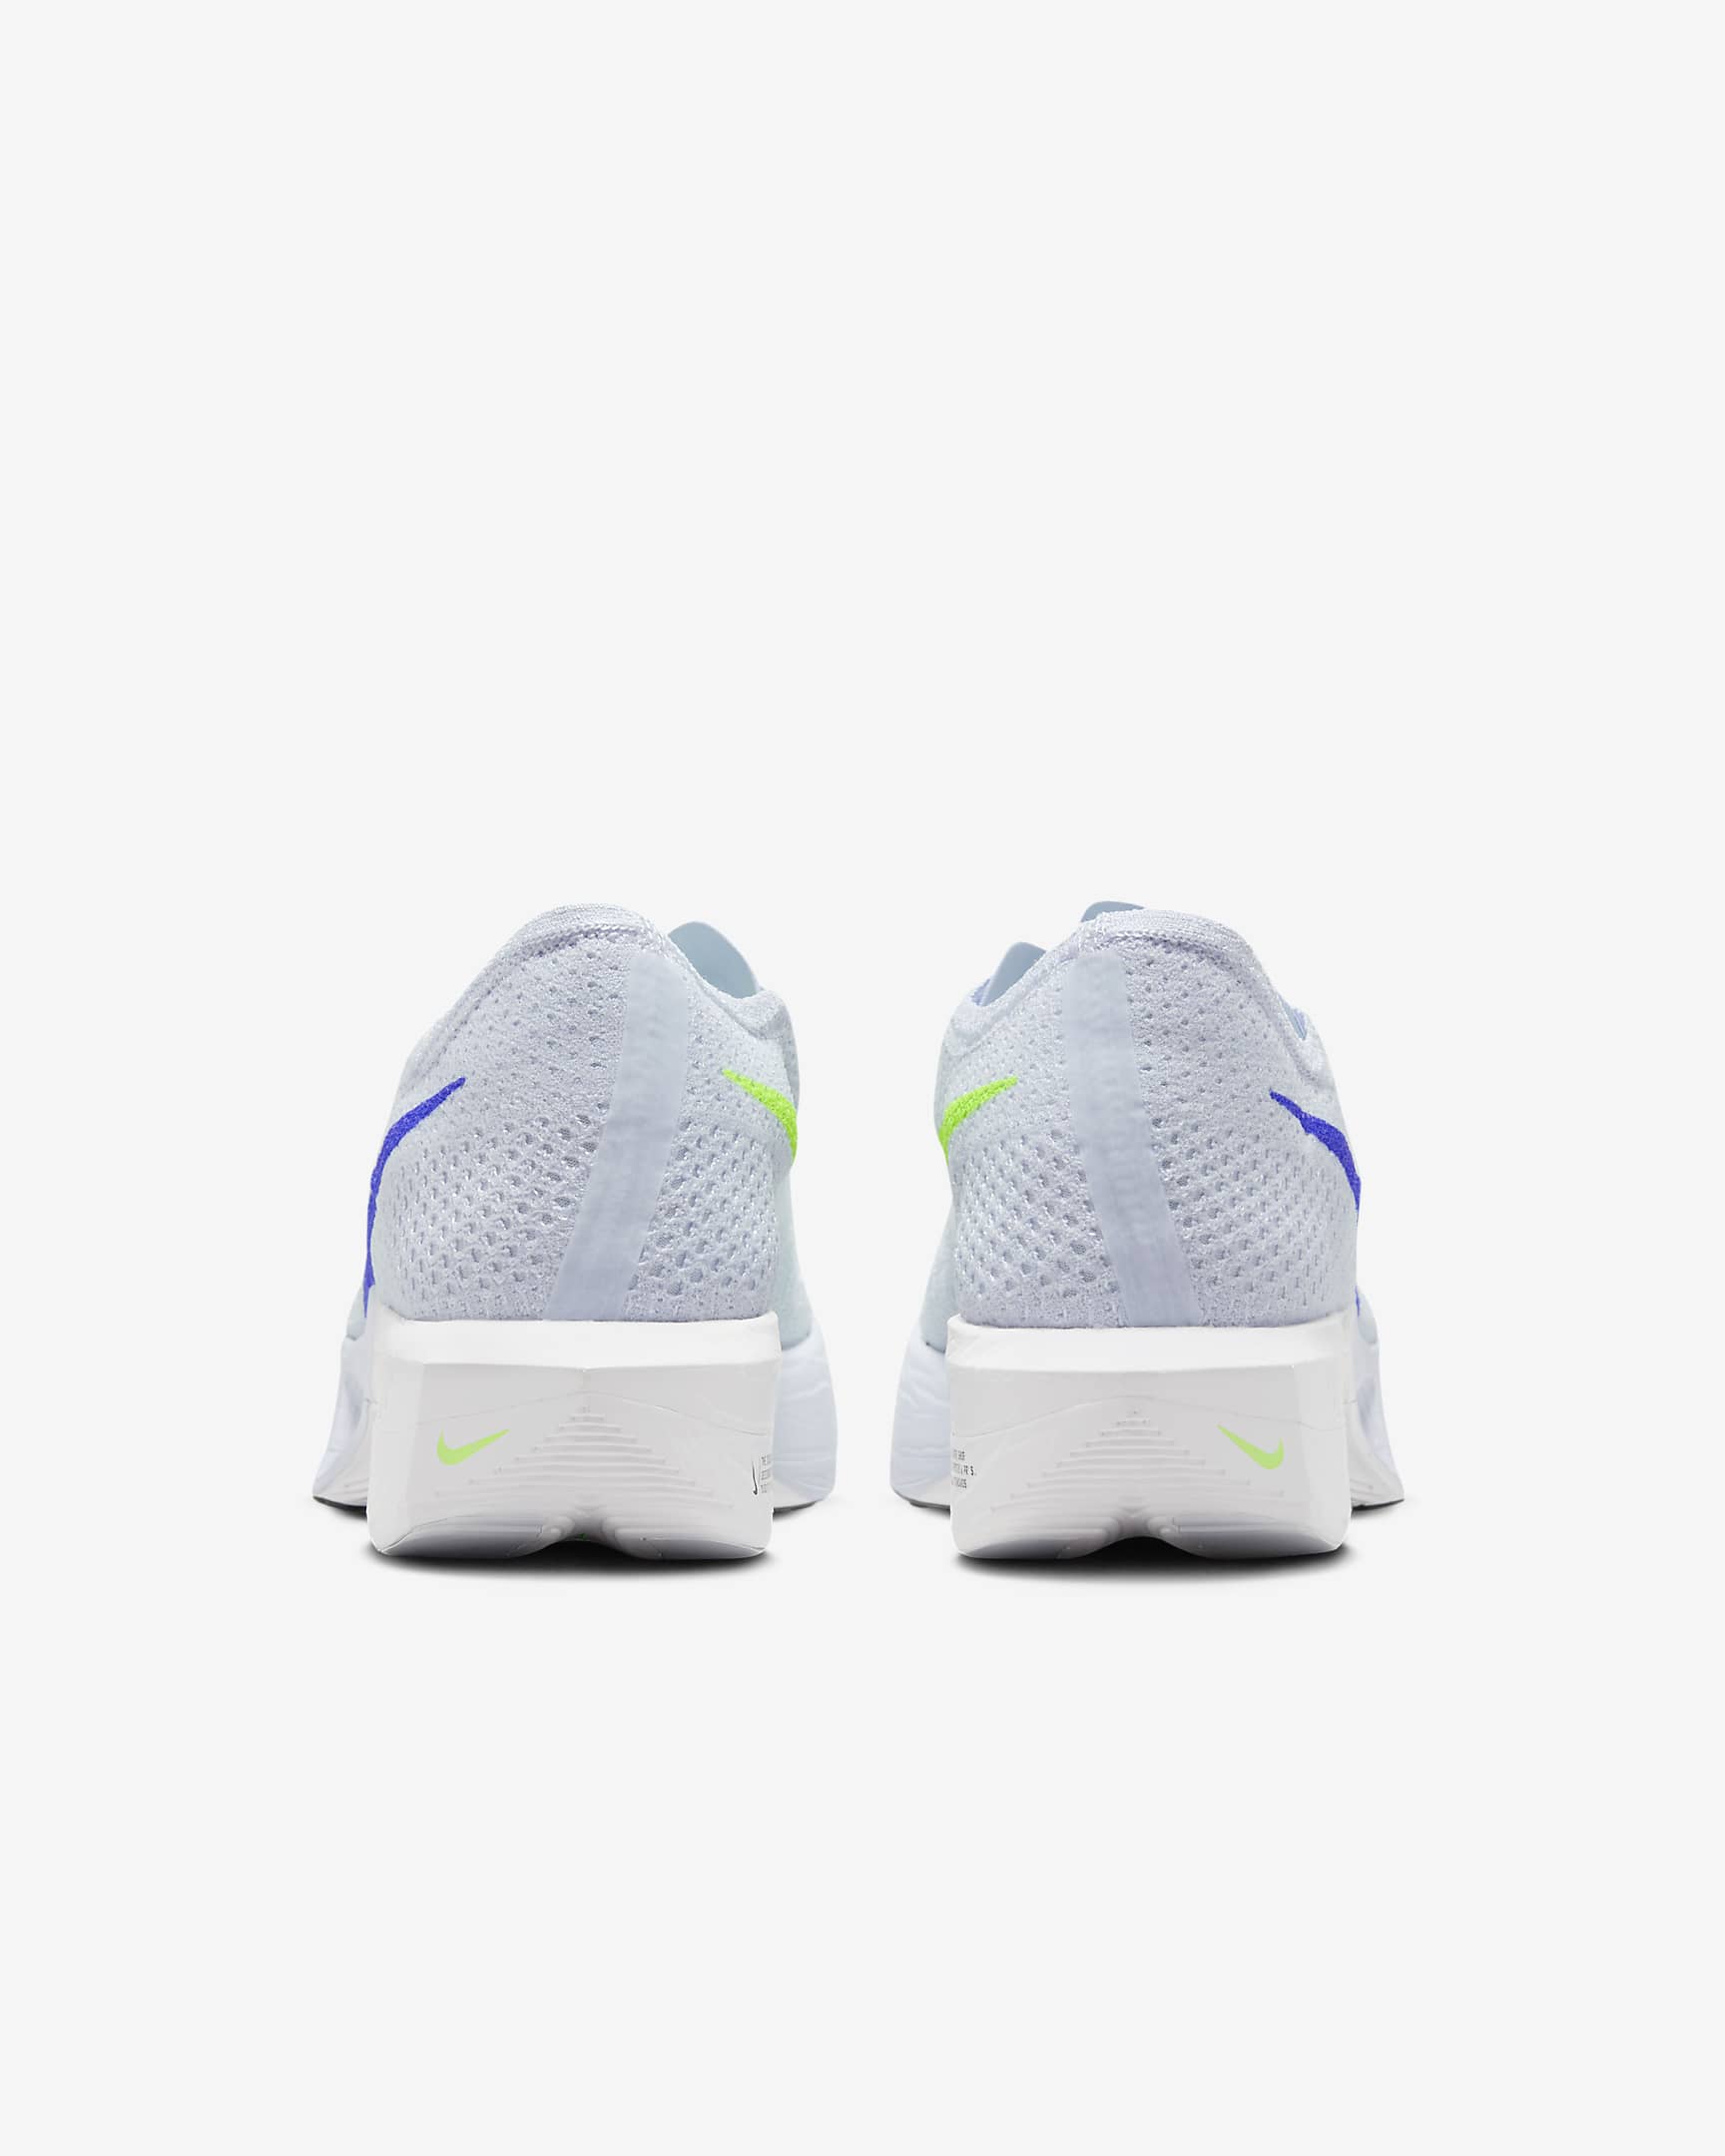 Nike Vaporfly 3 Men's Road Racing Shoes - Football Grey/Green Strike/Light Armoury Blue/Racer Blue